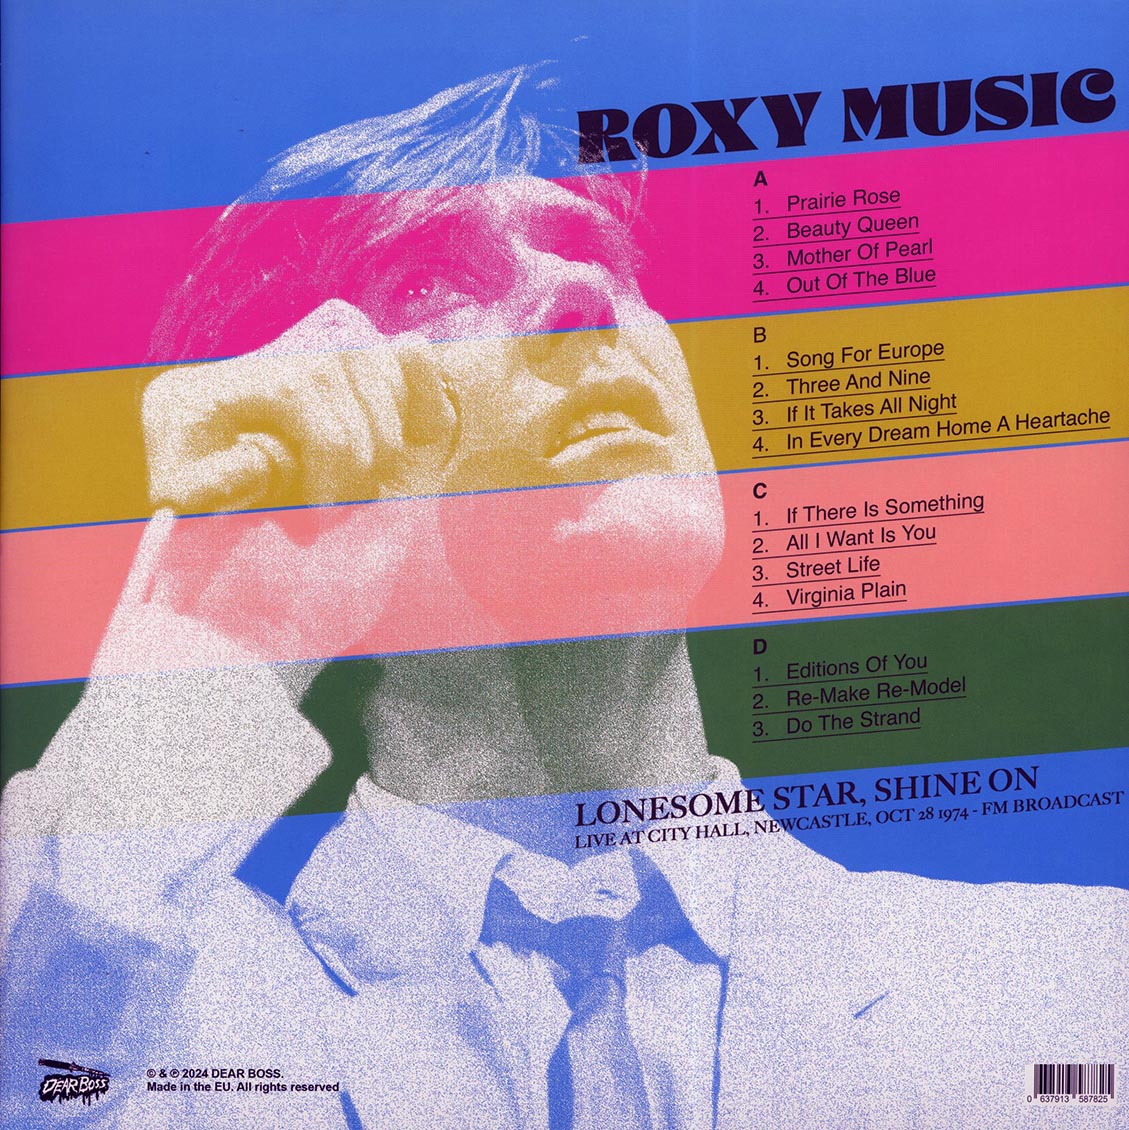 Roxy Music - Lonesome Star, Shine On: Live At City Hall, Newcastle, Oct 28 1974 (ltd. 300 copies made) (2xLP) (colored vinyl) - Vinyl LP, LP